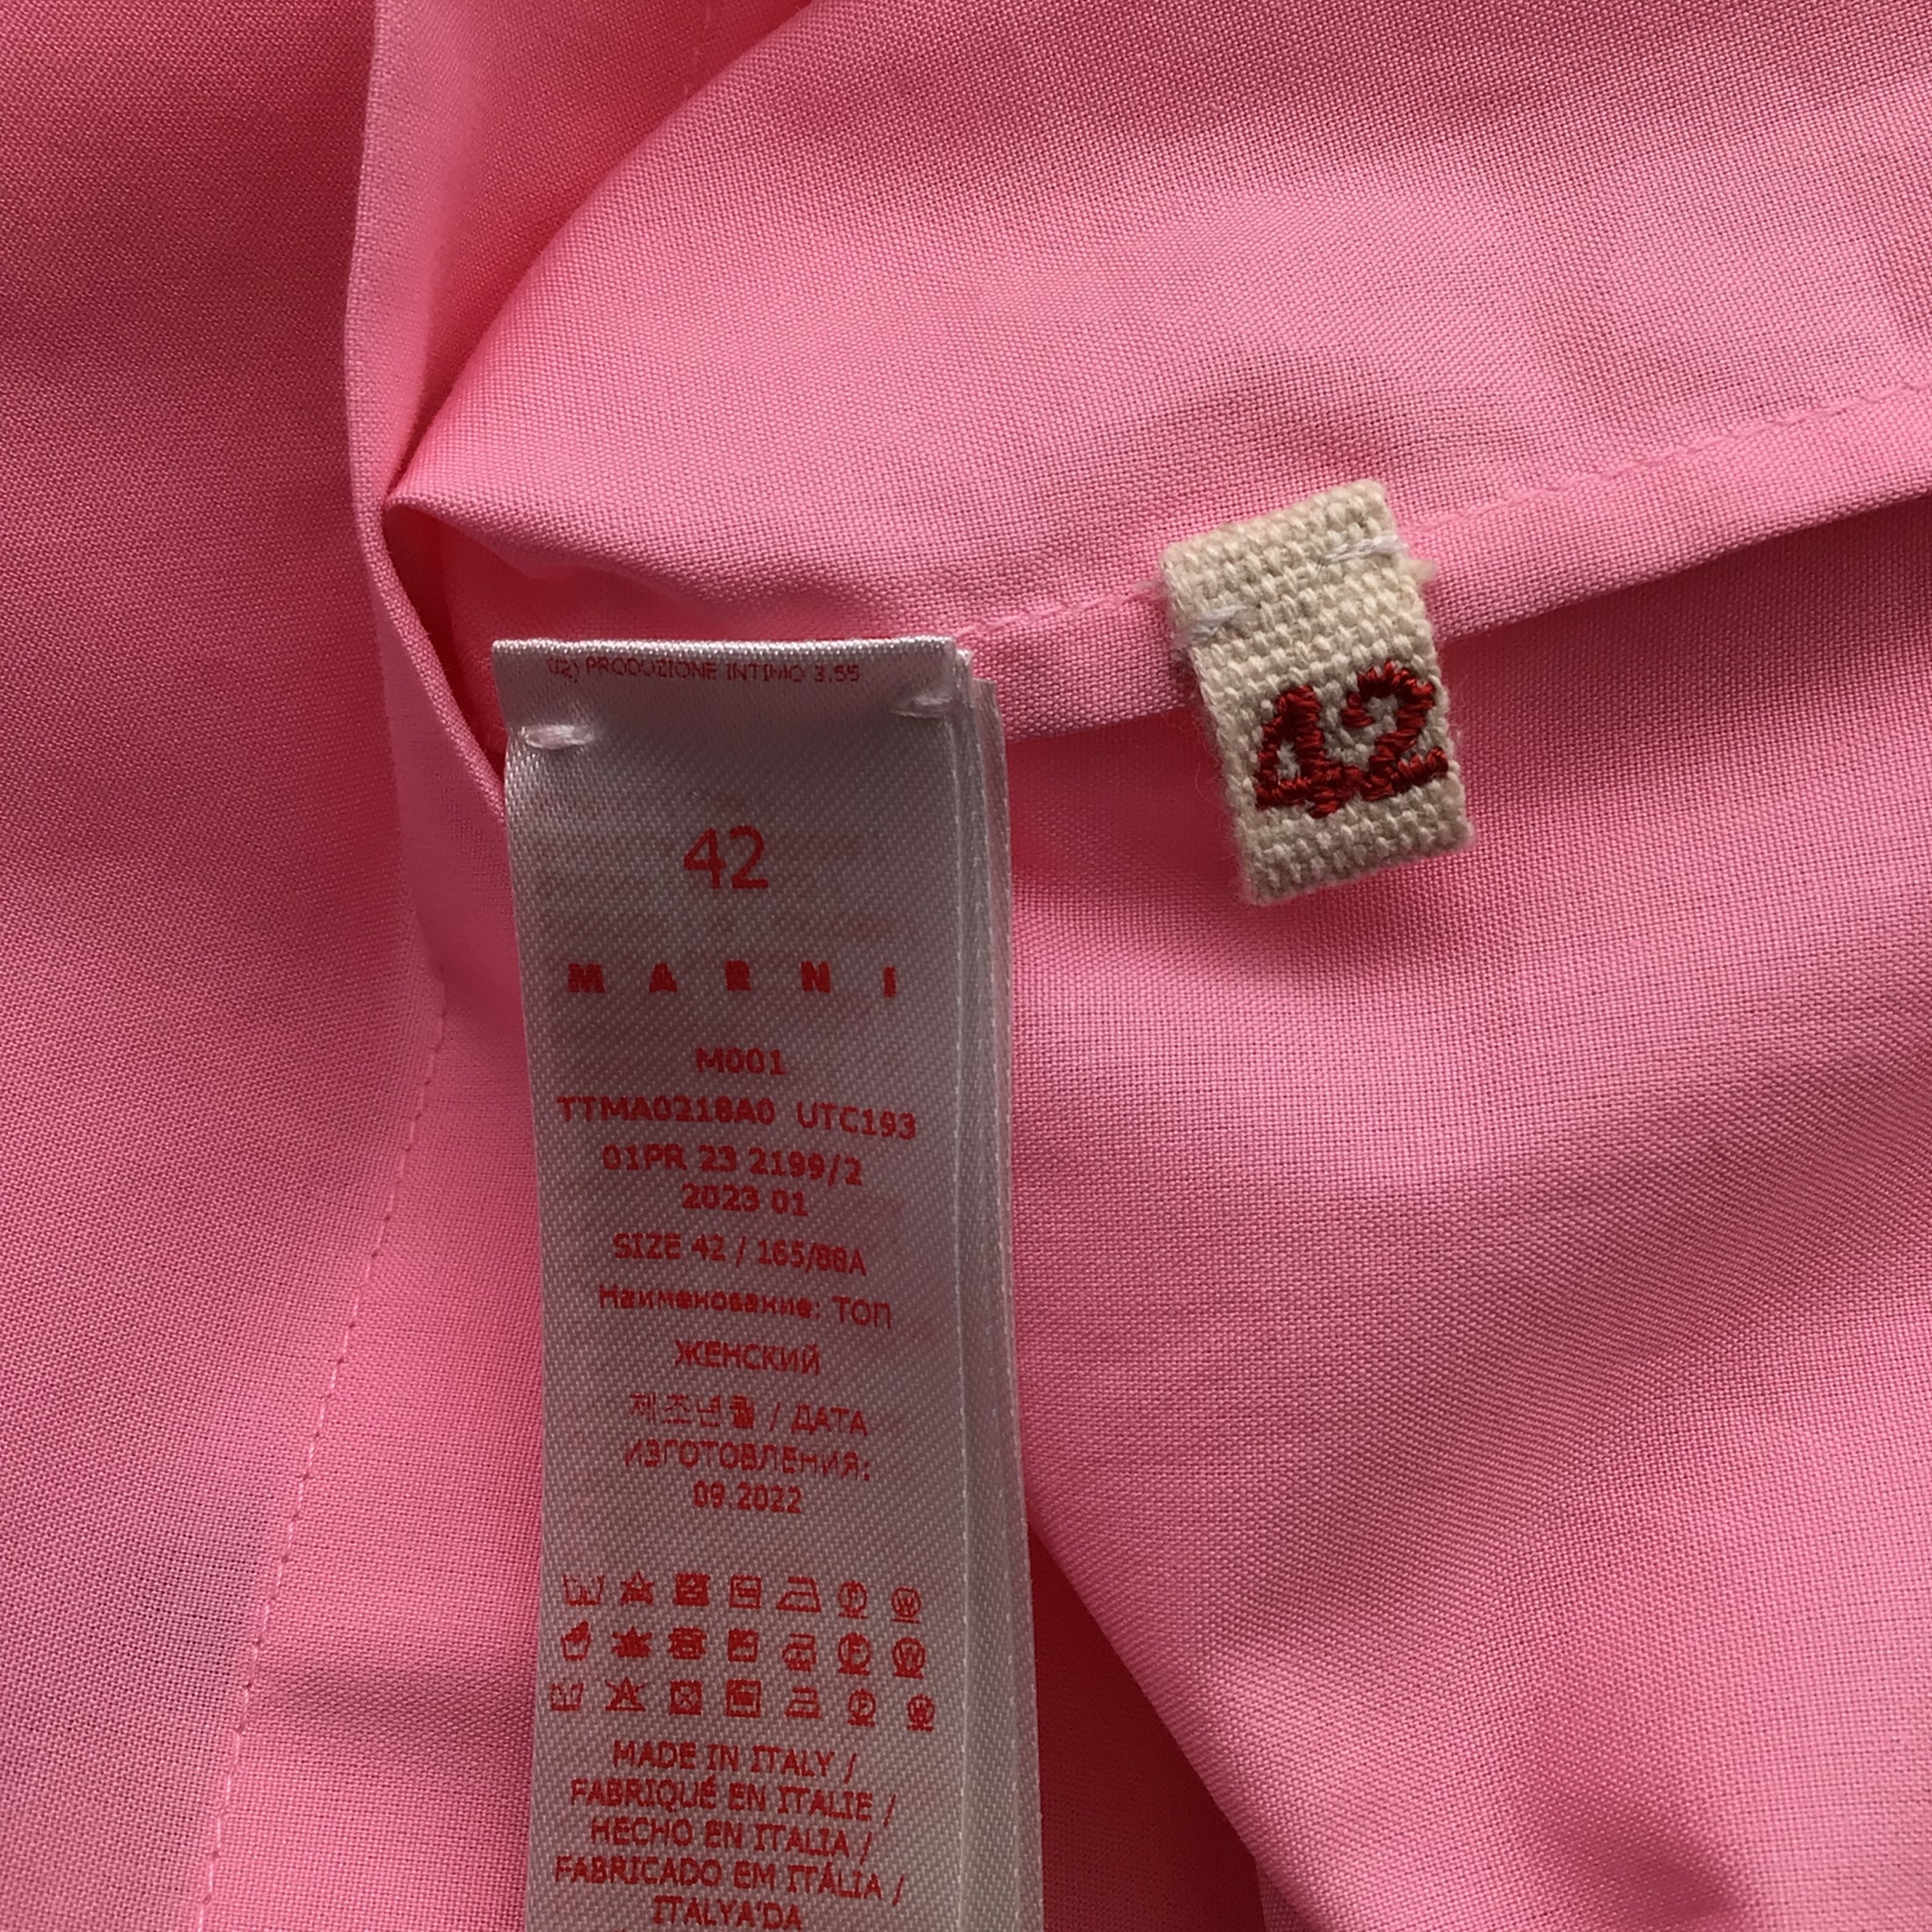 Marni Pink Sleeveless Cotton Top